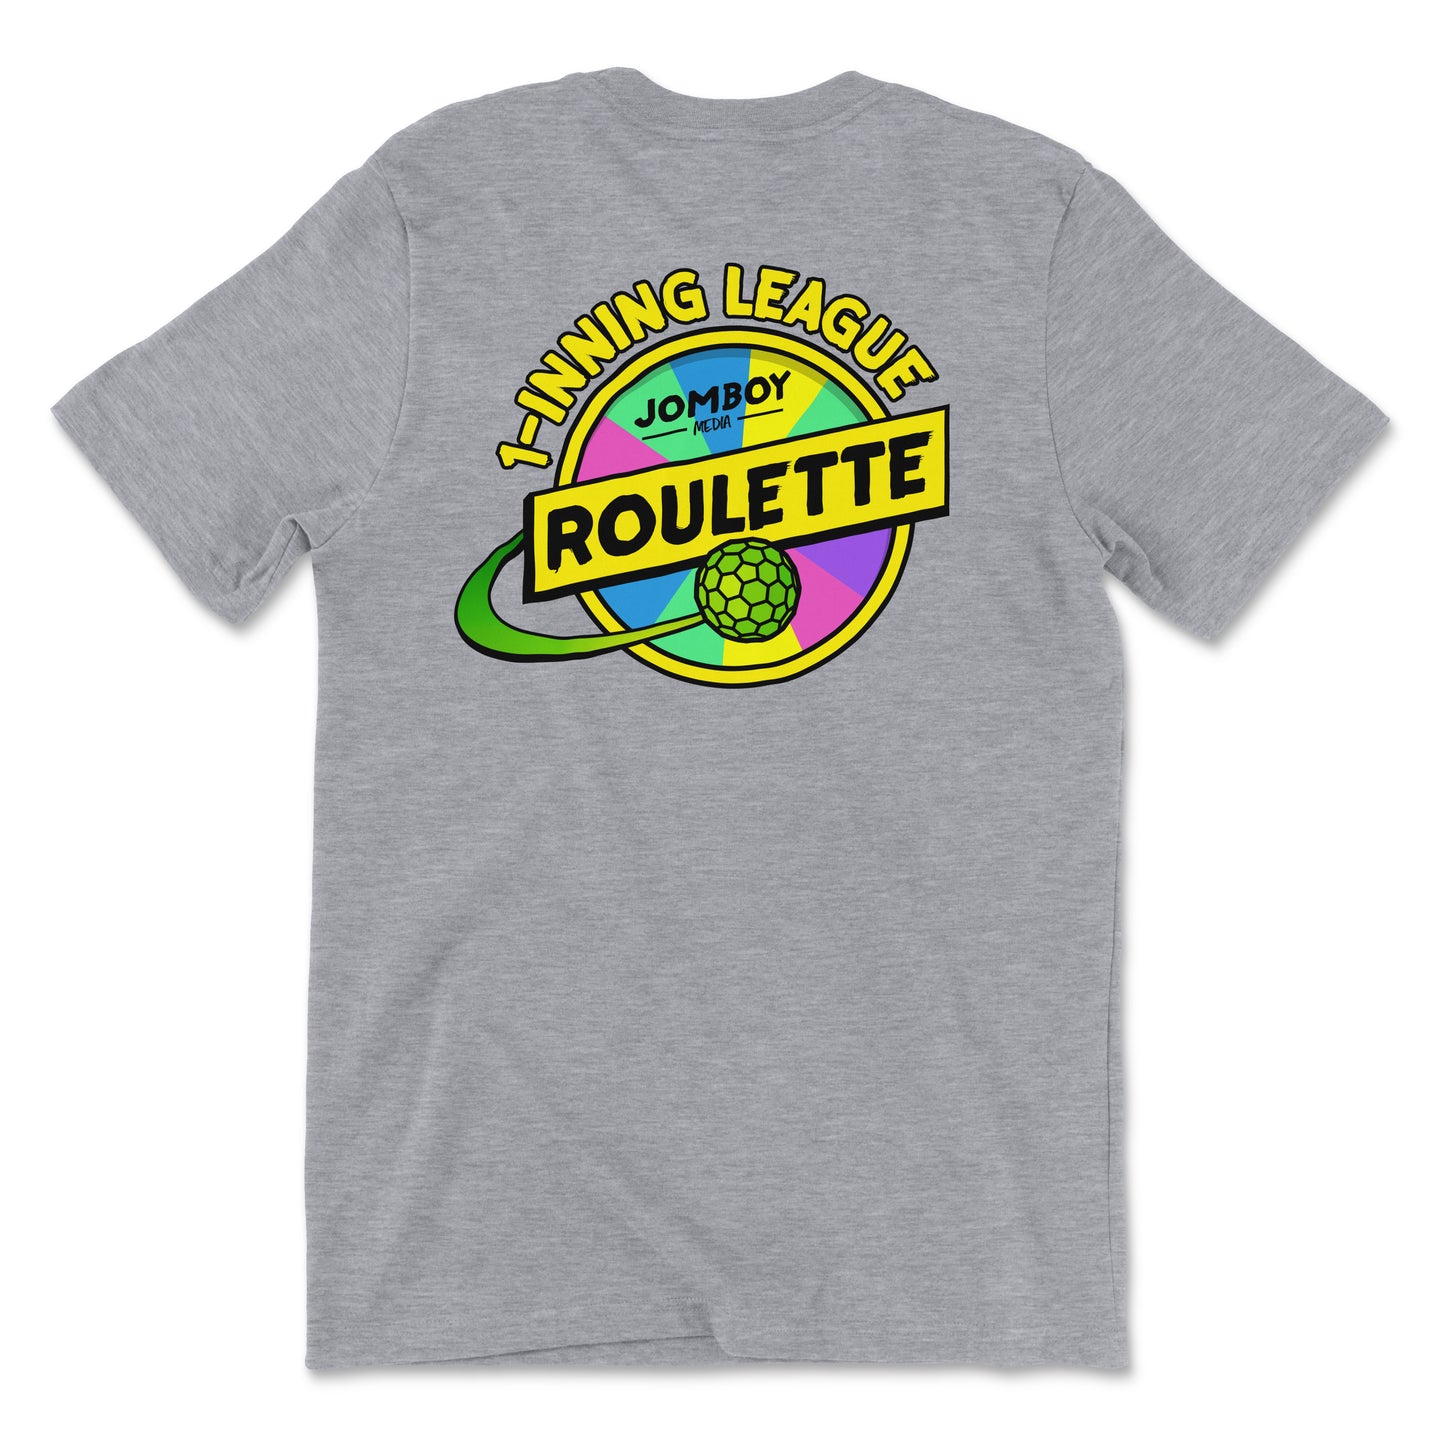 Team Jake 1-Inning League Roulette | T-Shirt